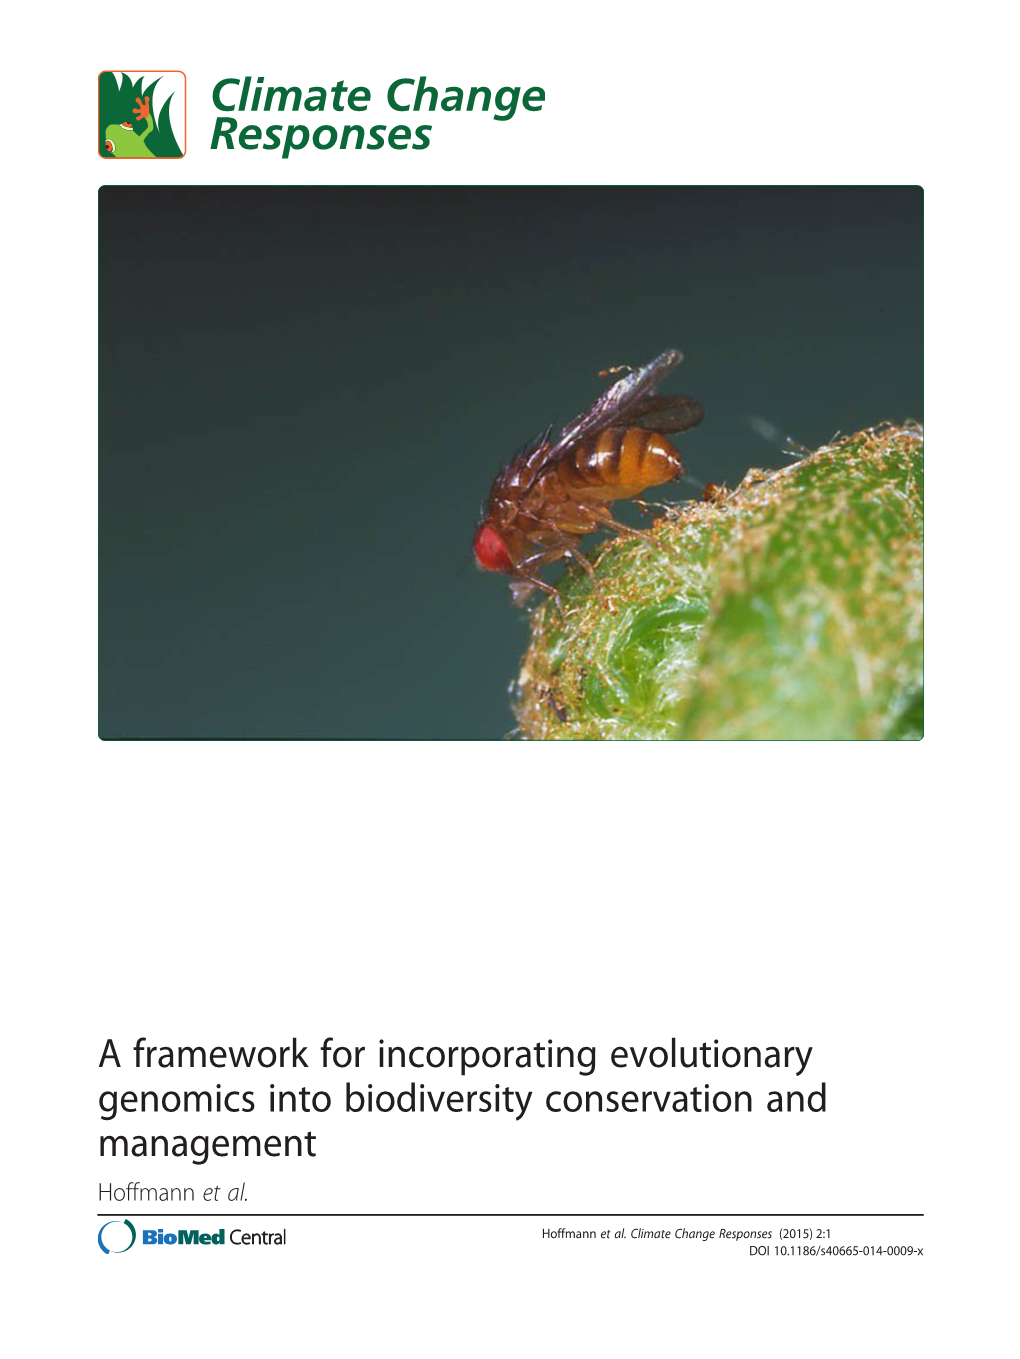 A Framework for Incorporating Evolutionary Genomics Into Biodiversity Conservation and Management Hoffmann Et Al